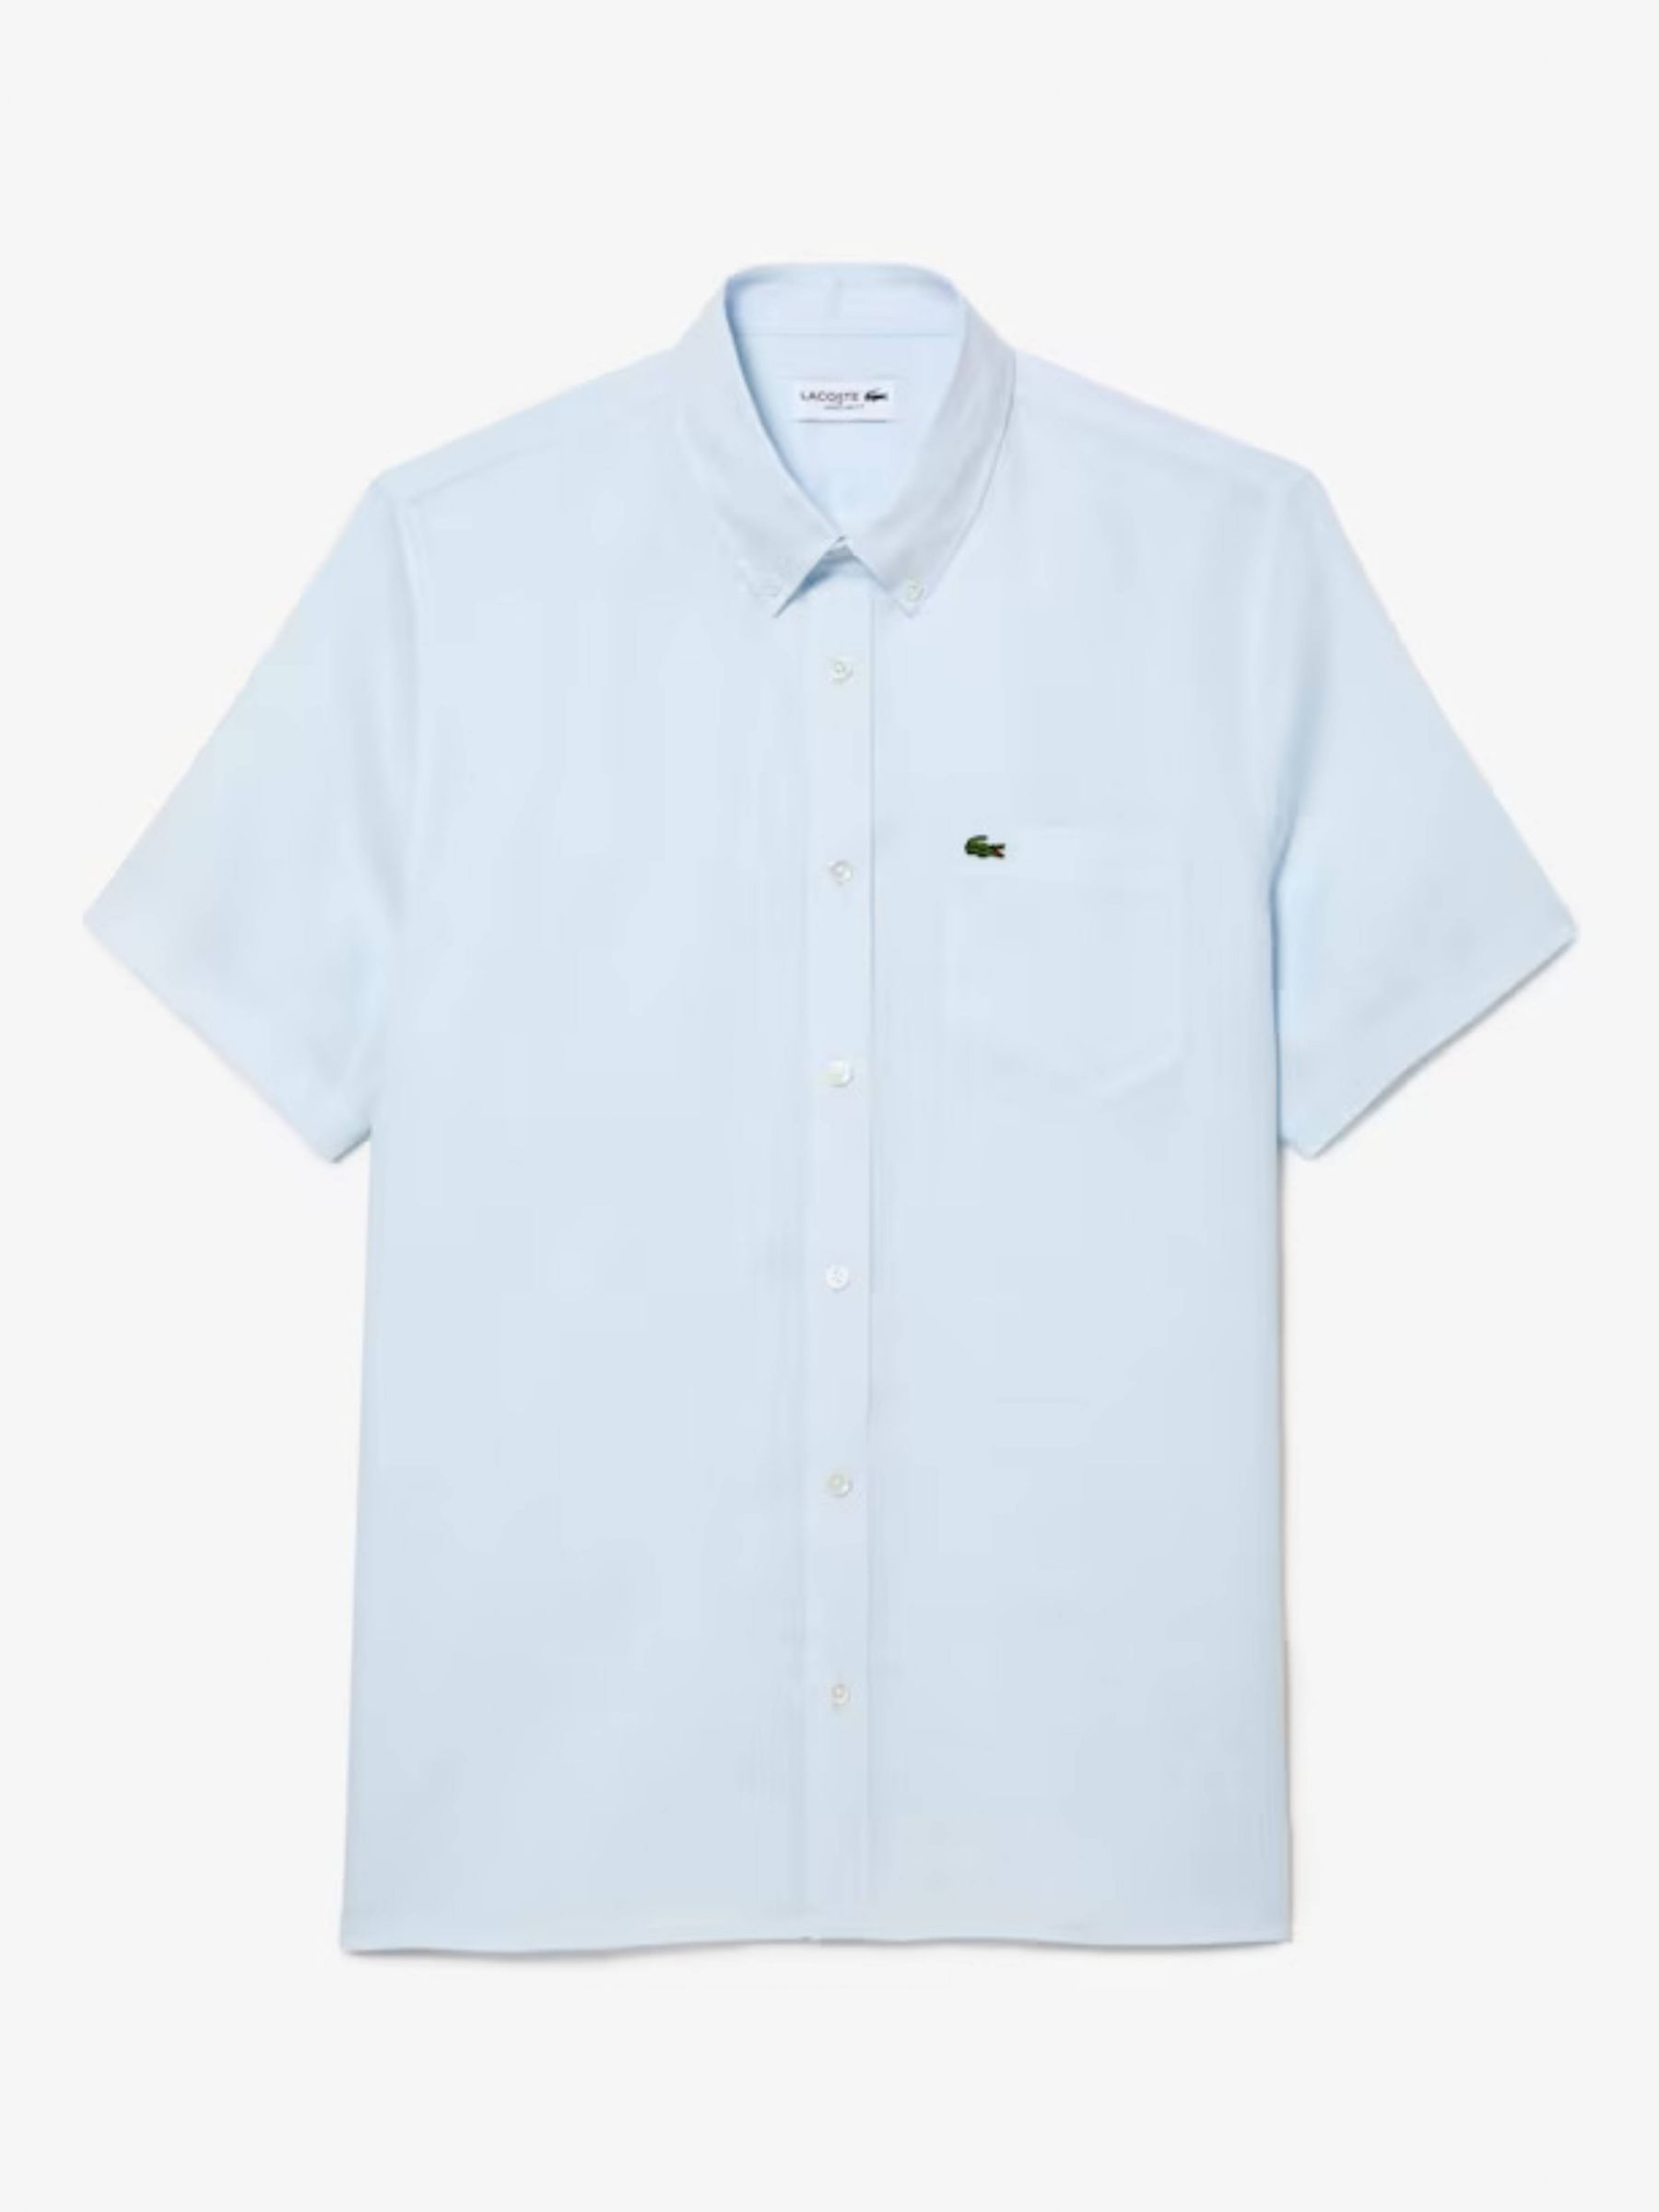 Lacoste Short Sleeve Linen Shirt, Blue at John Lewis & Partners